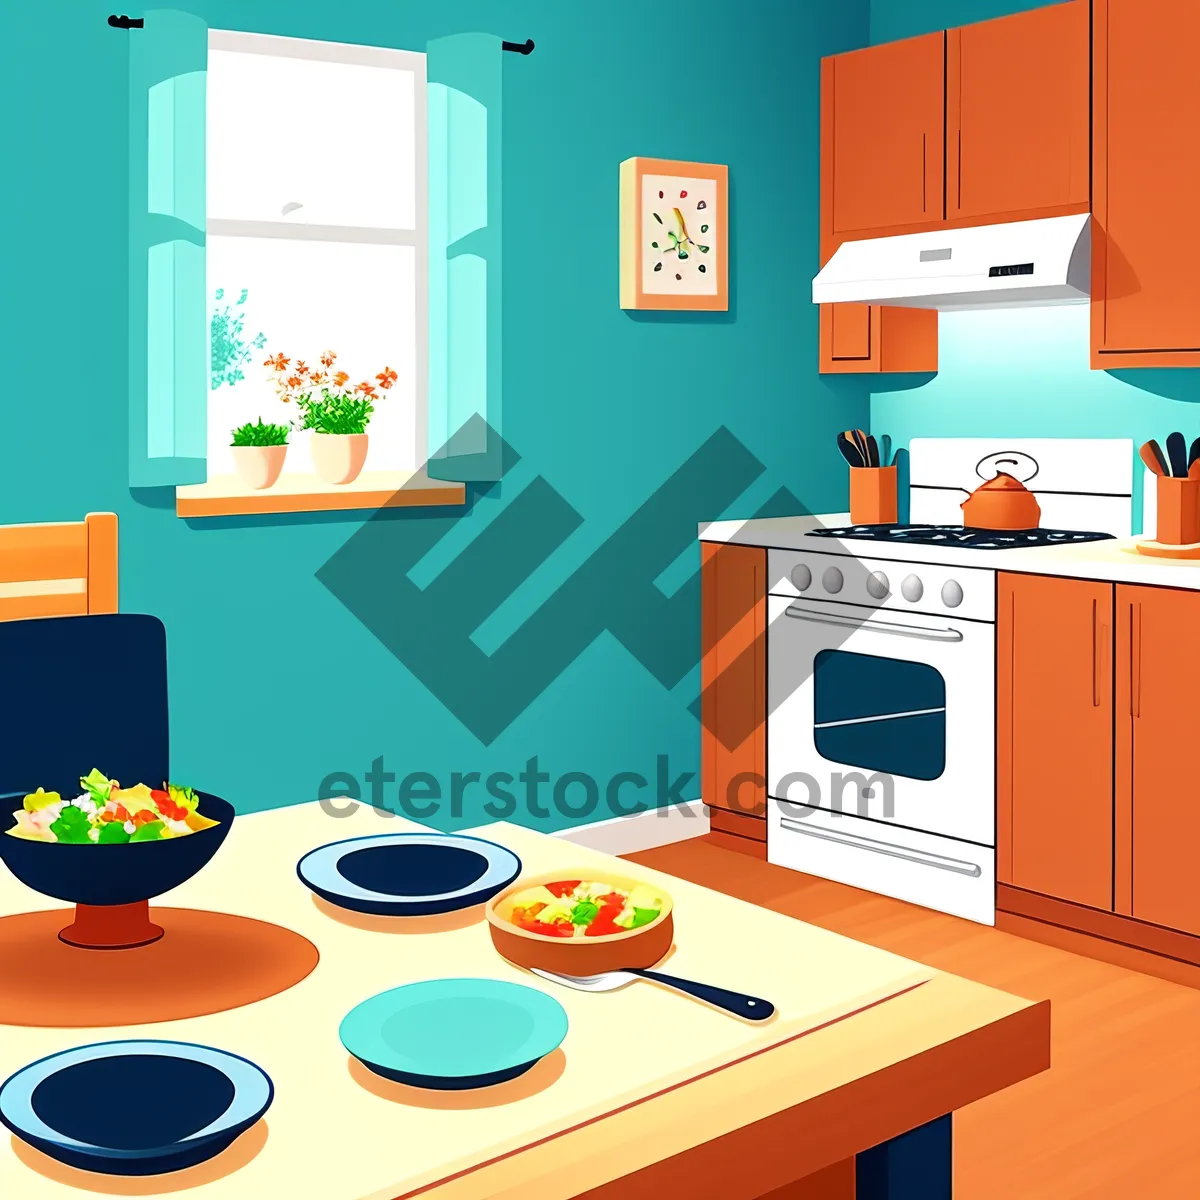 Picture of Modern 3D kitchen counter design in corner.